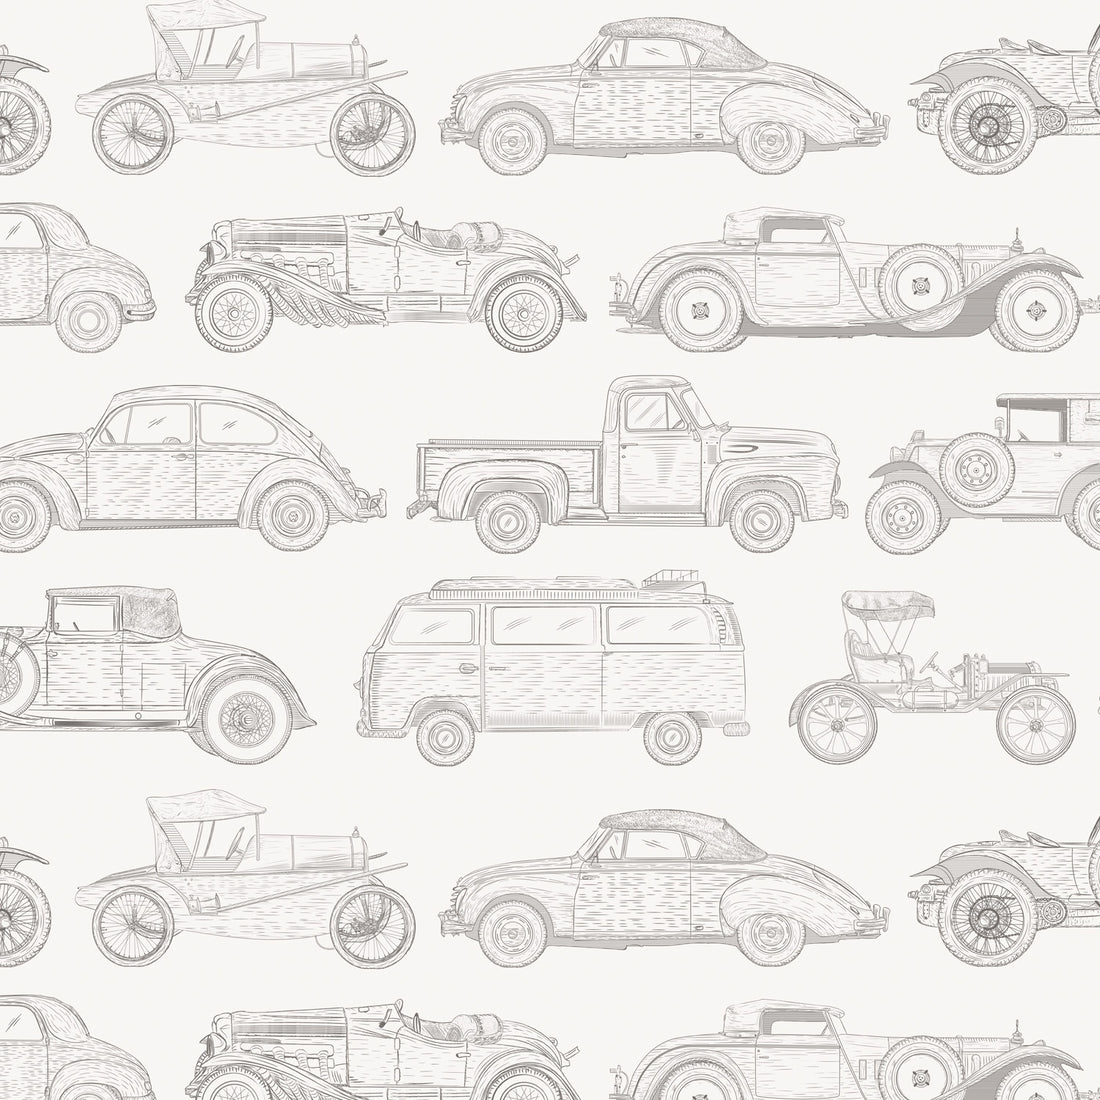 Papier Turnowsky, Papier fantaisie motifs voitures